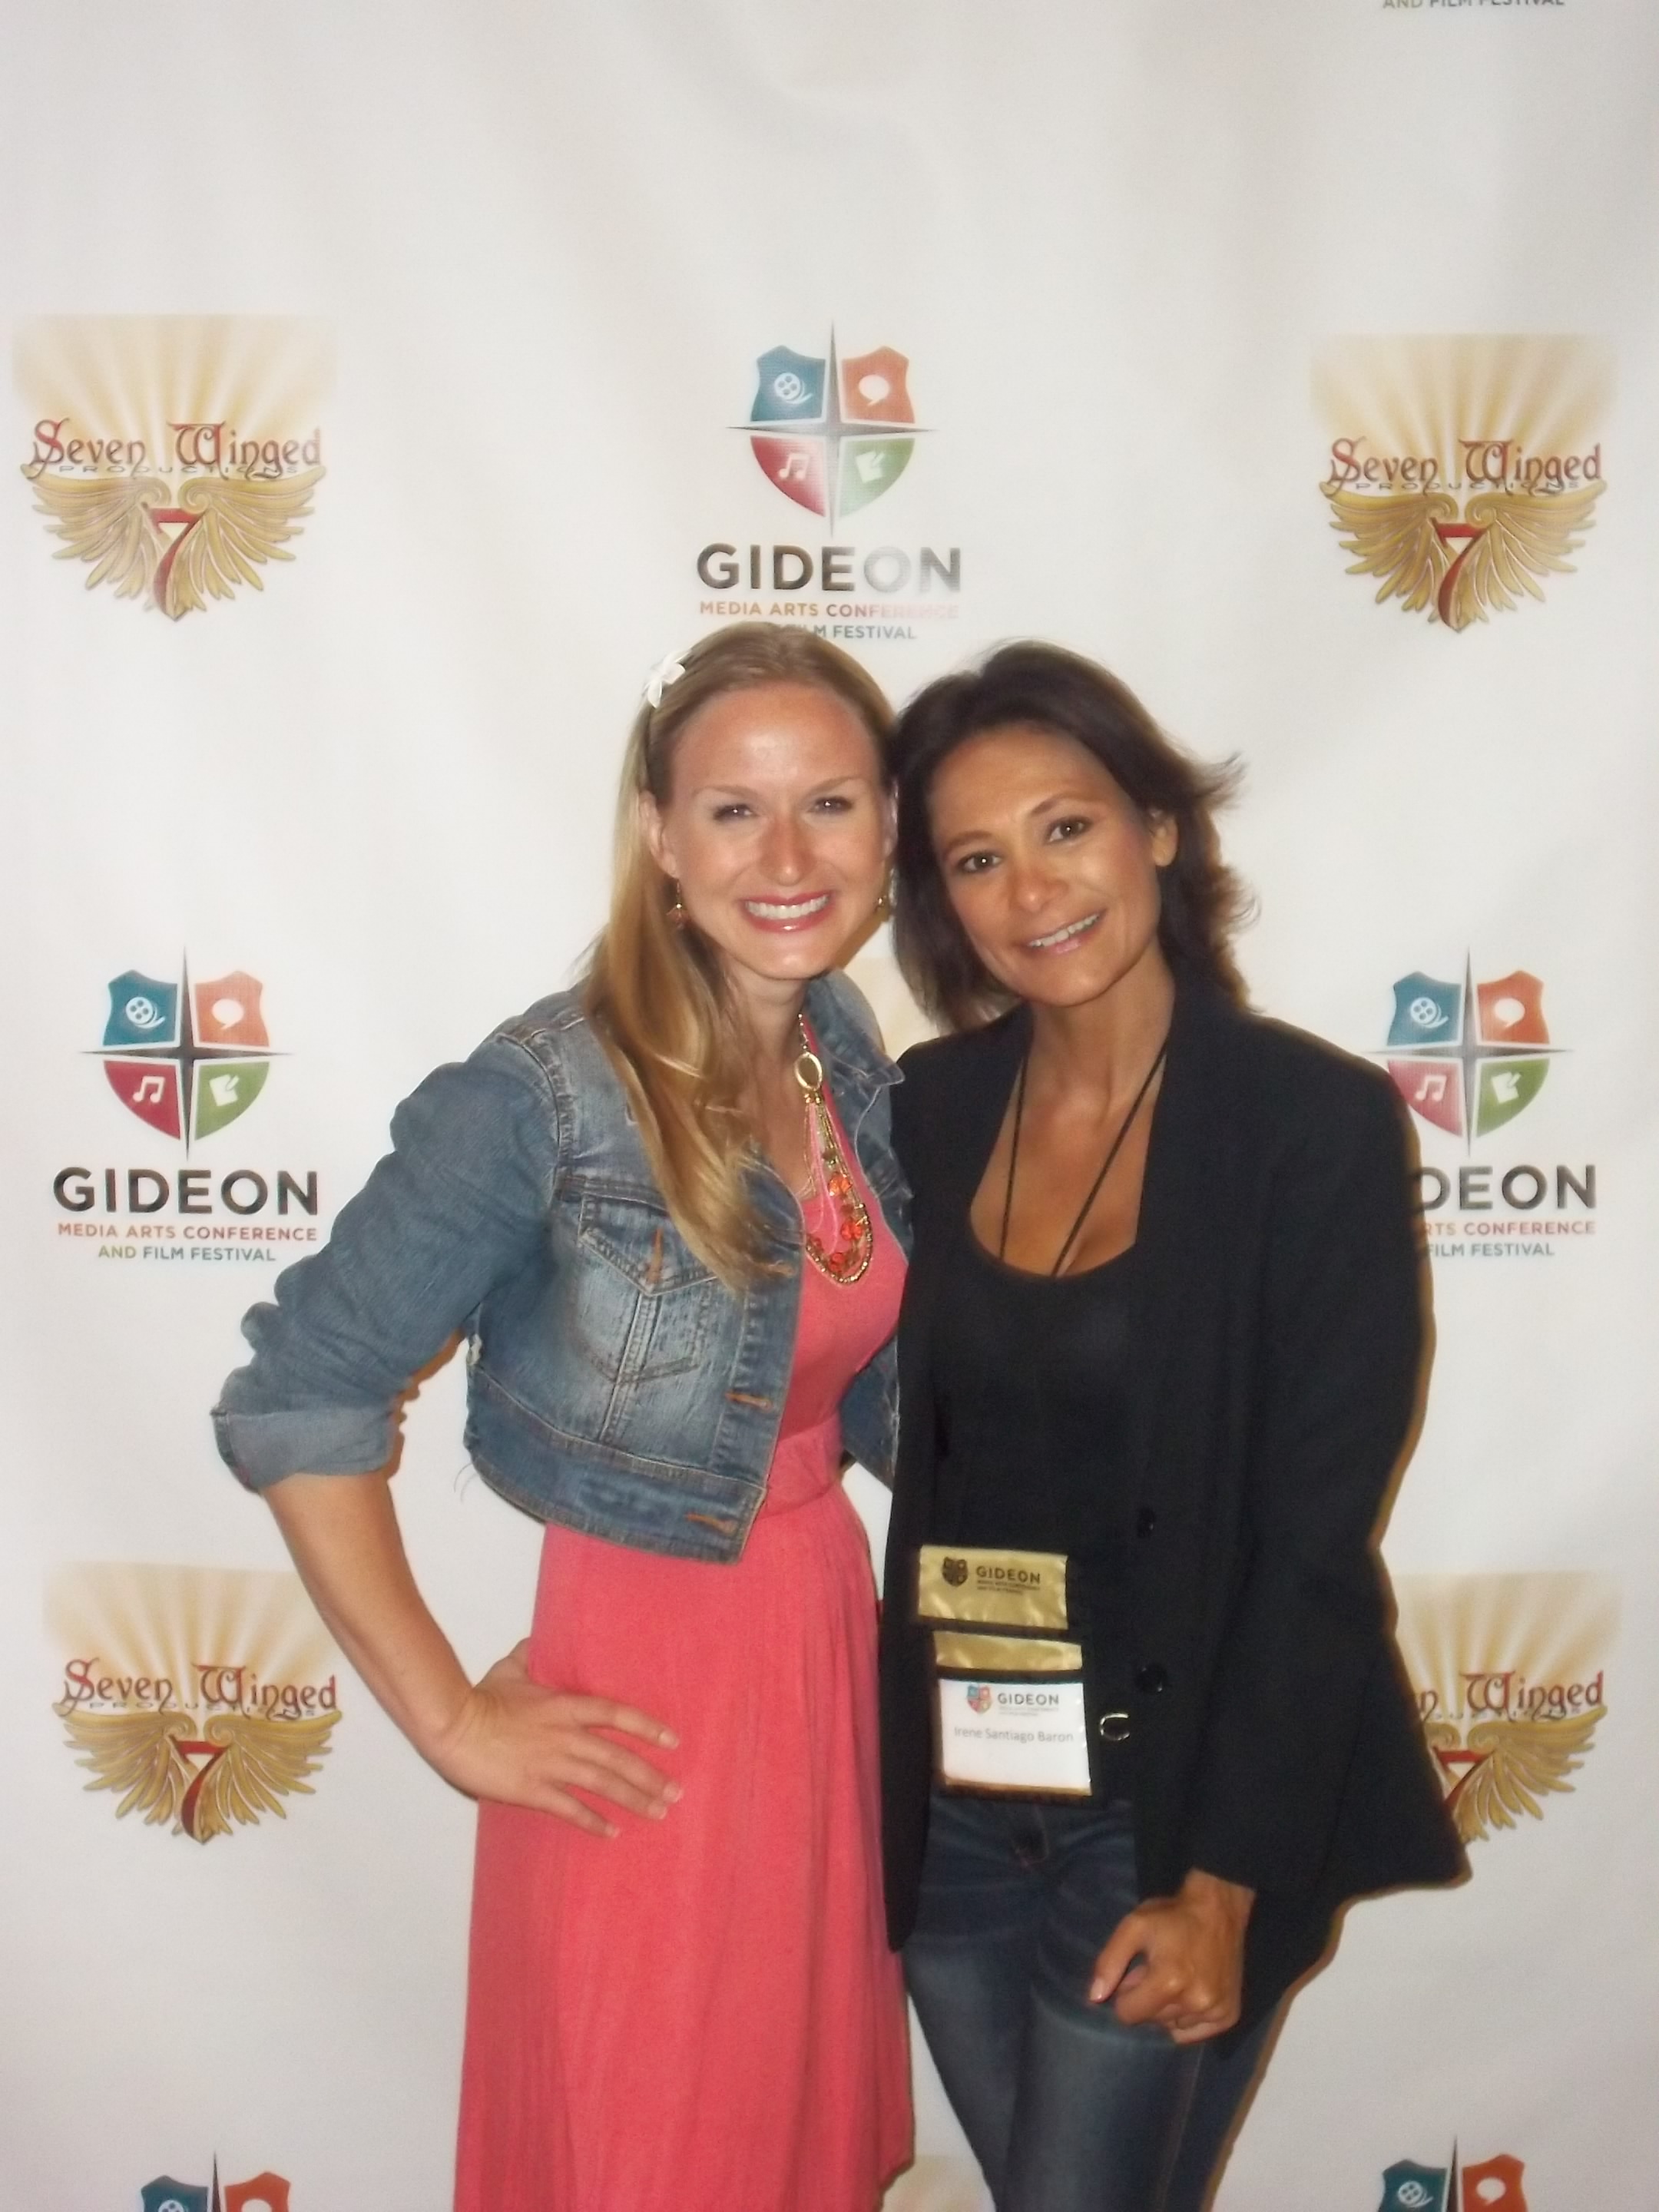 with Jenn Gotzon at Gideon Film Festival.